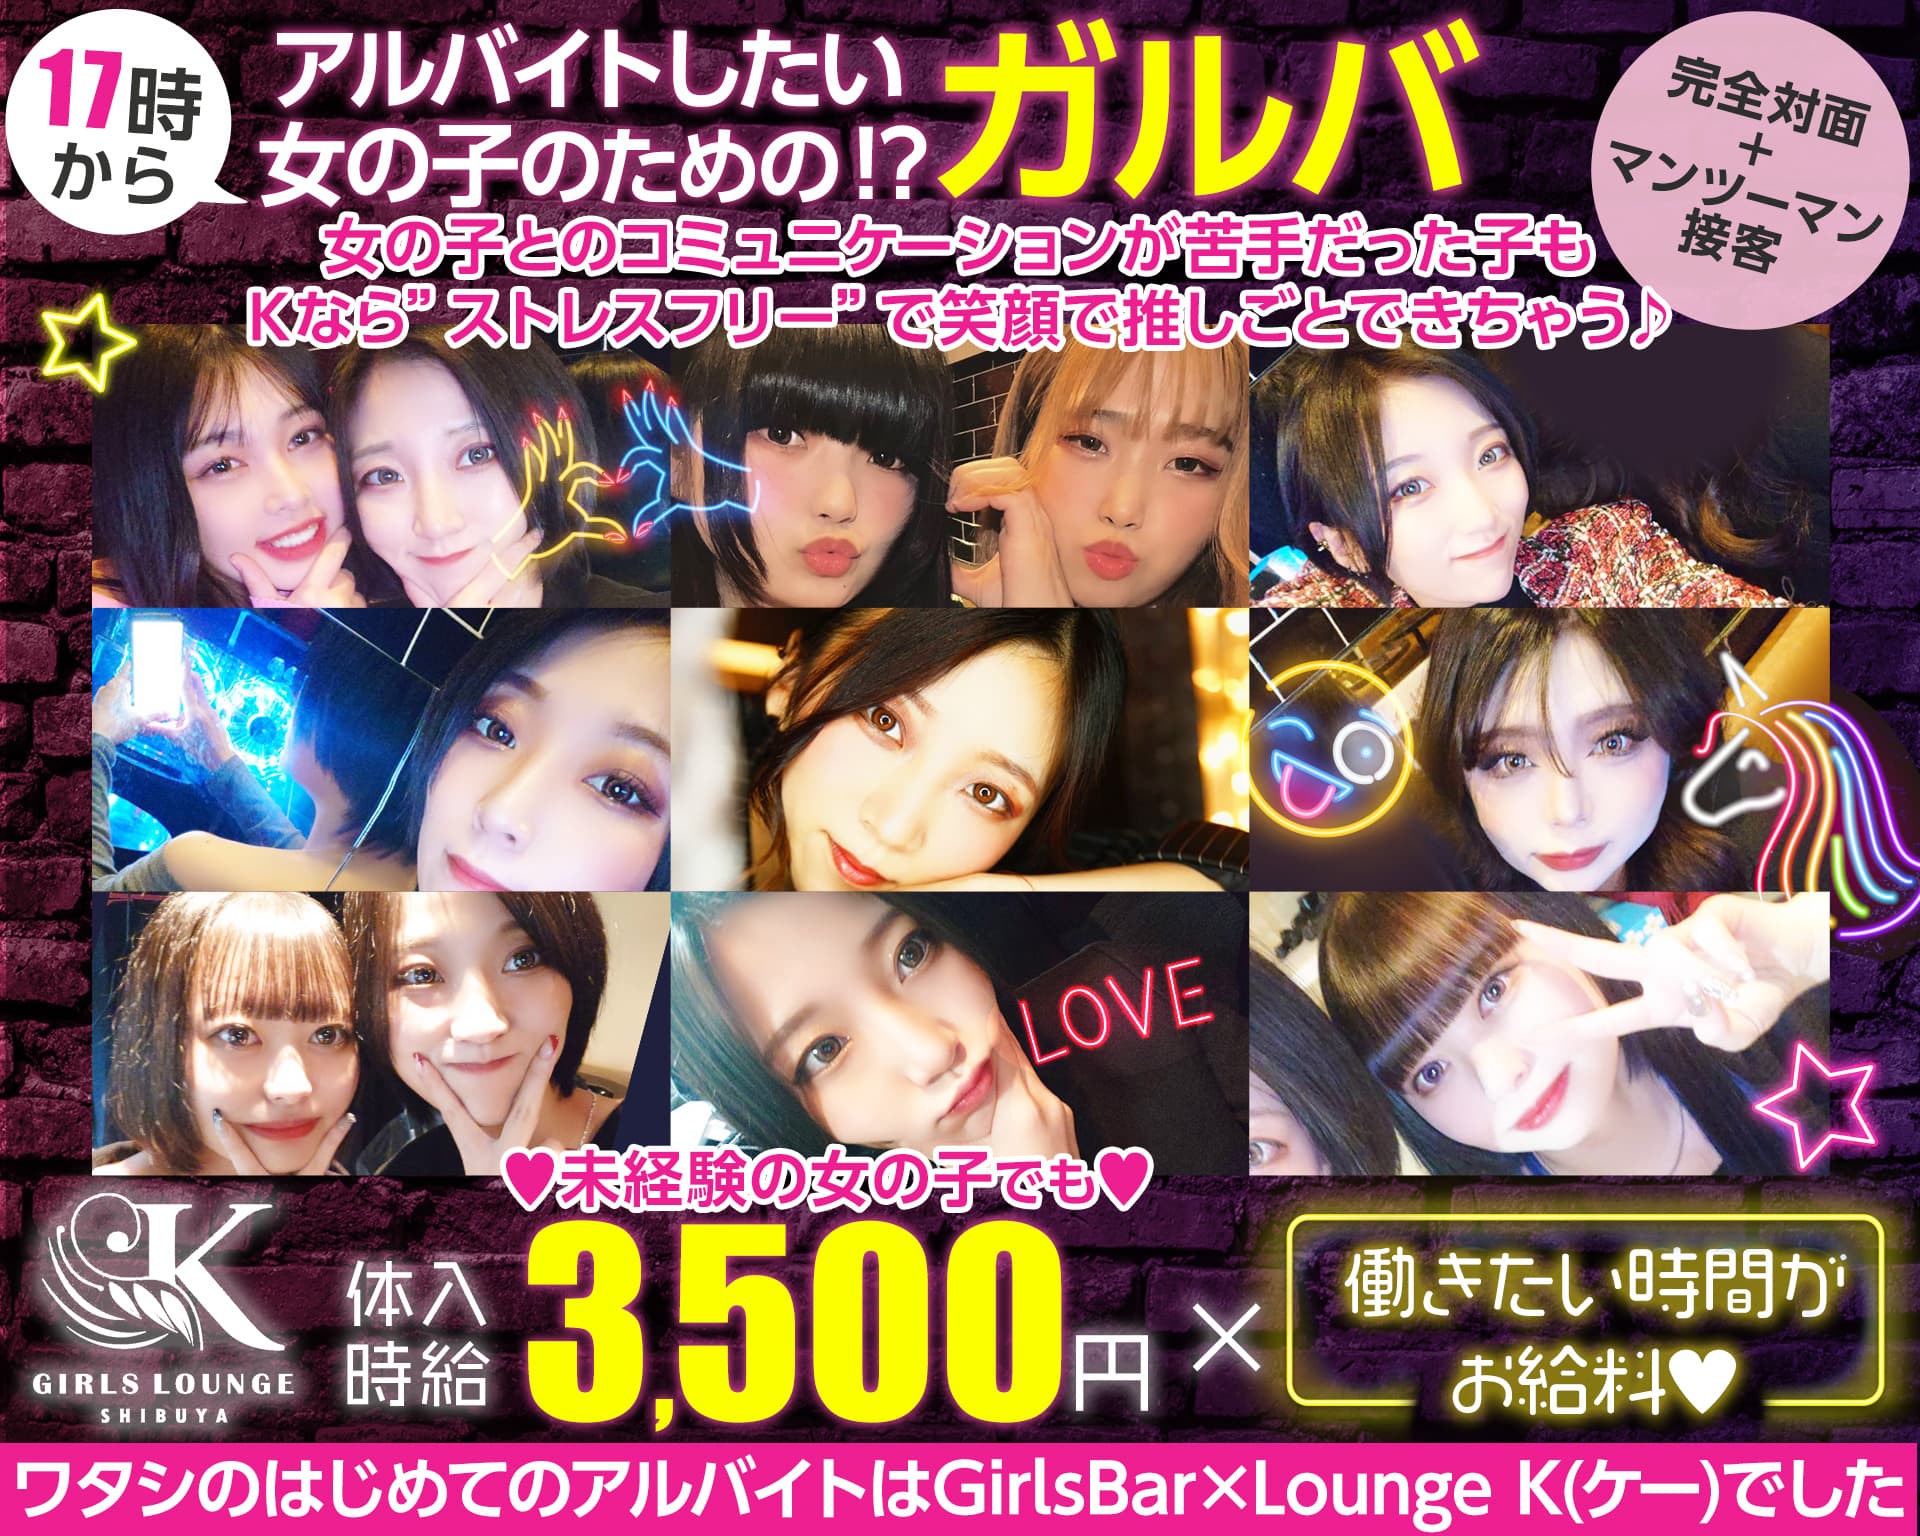 GirlsBarxLounge K(ケー)【公式体入・求人情報】 渋谷ガールズバー TOP画像